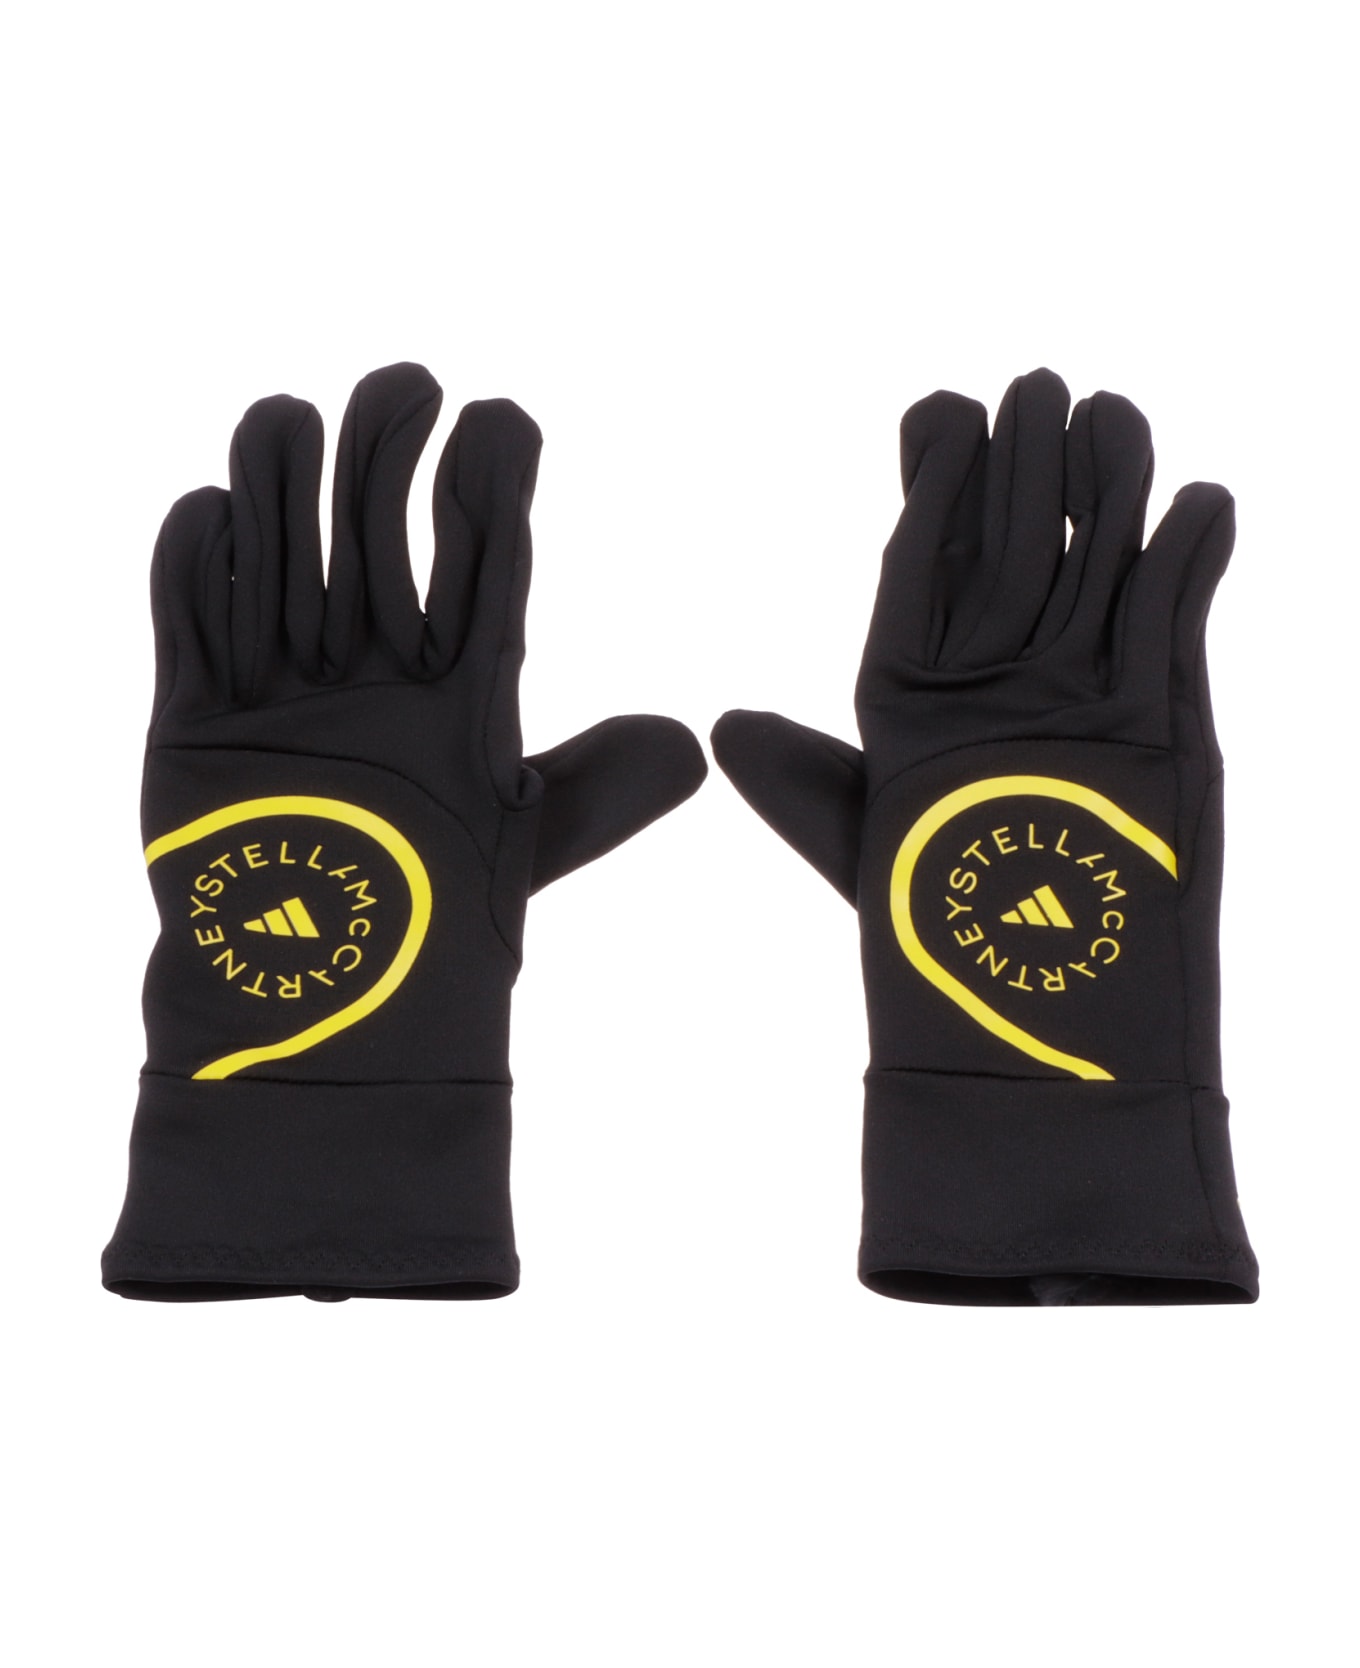 Adidas by Stella McCartney #n# Gloves - Black/shoyel